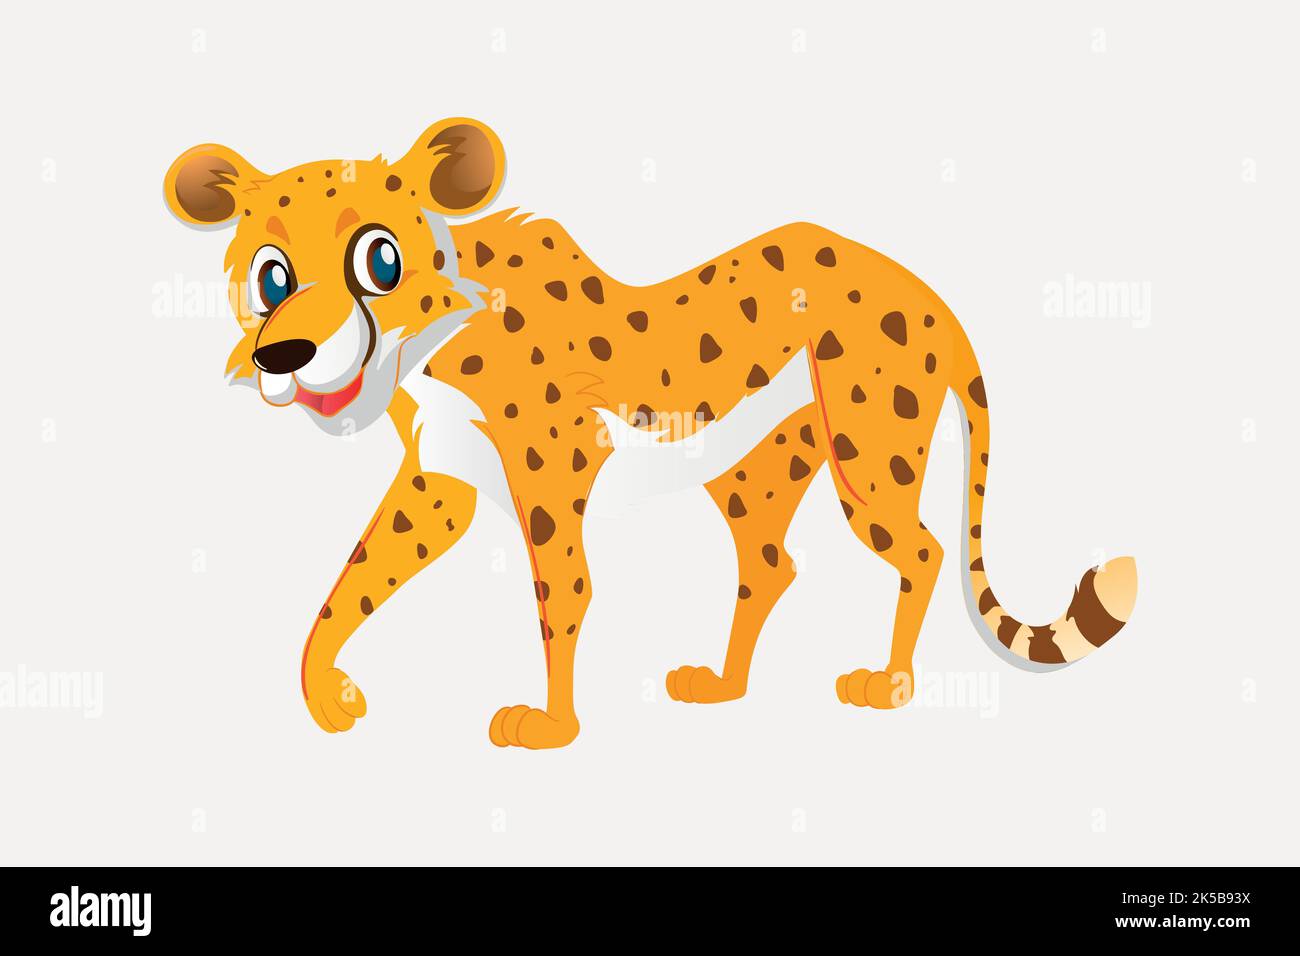 Leopard clipart, animal illustration vector Stock Vector Image & Art ...